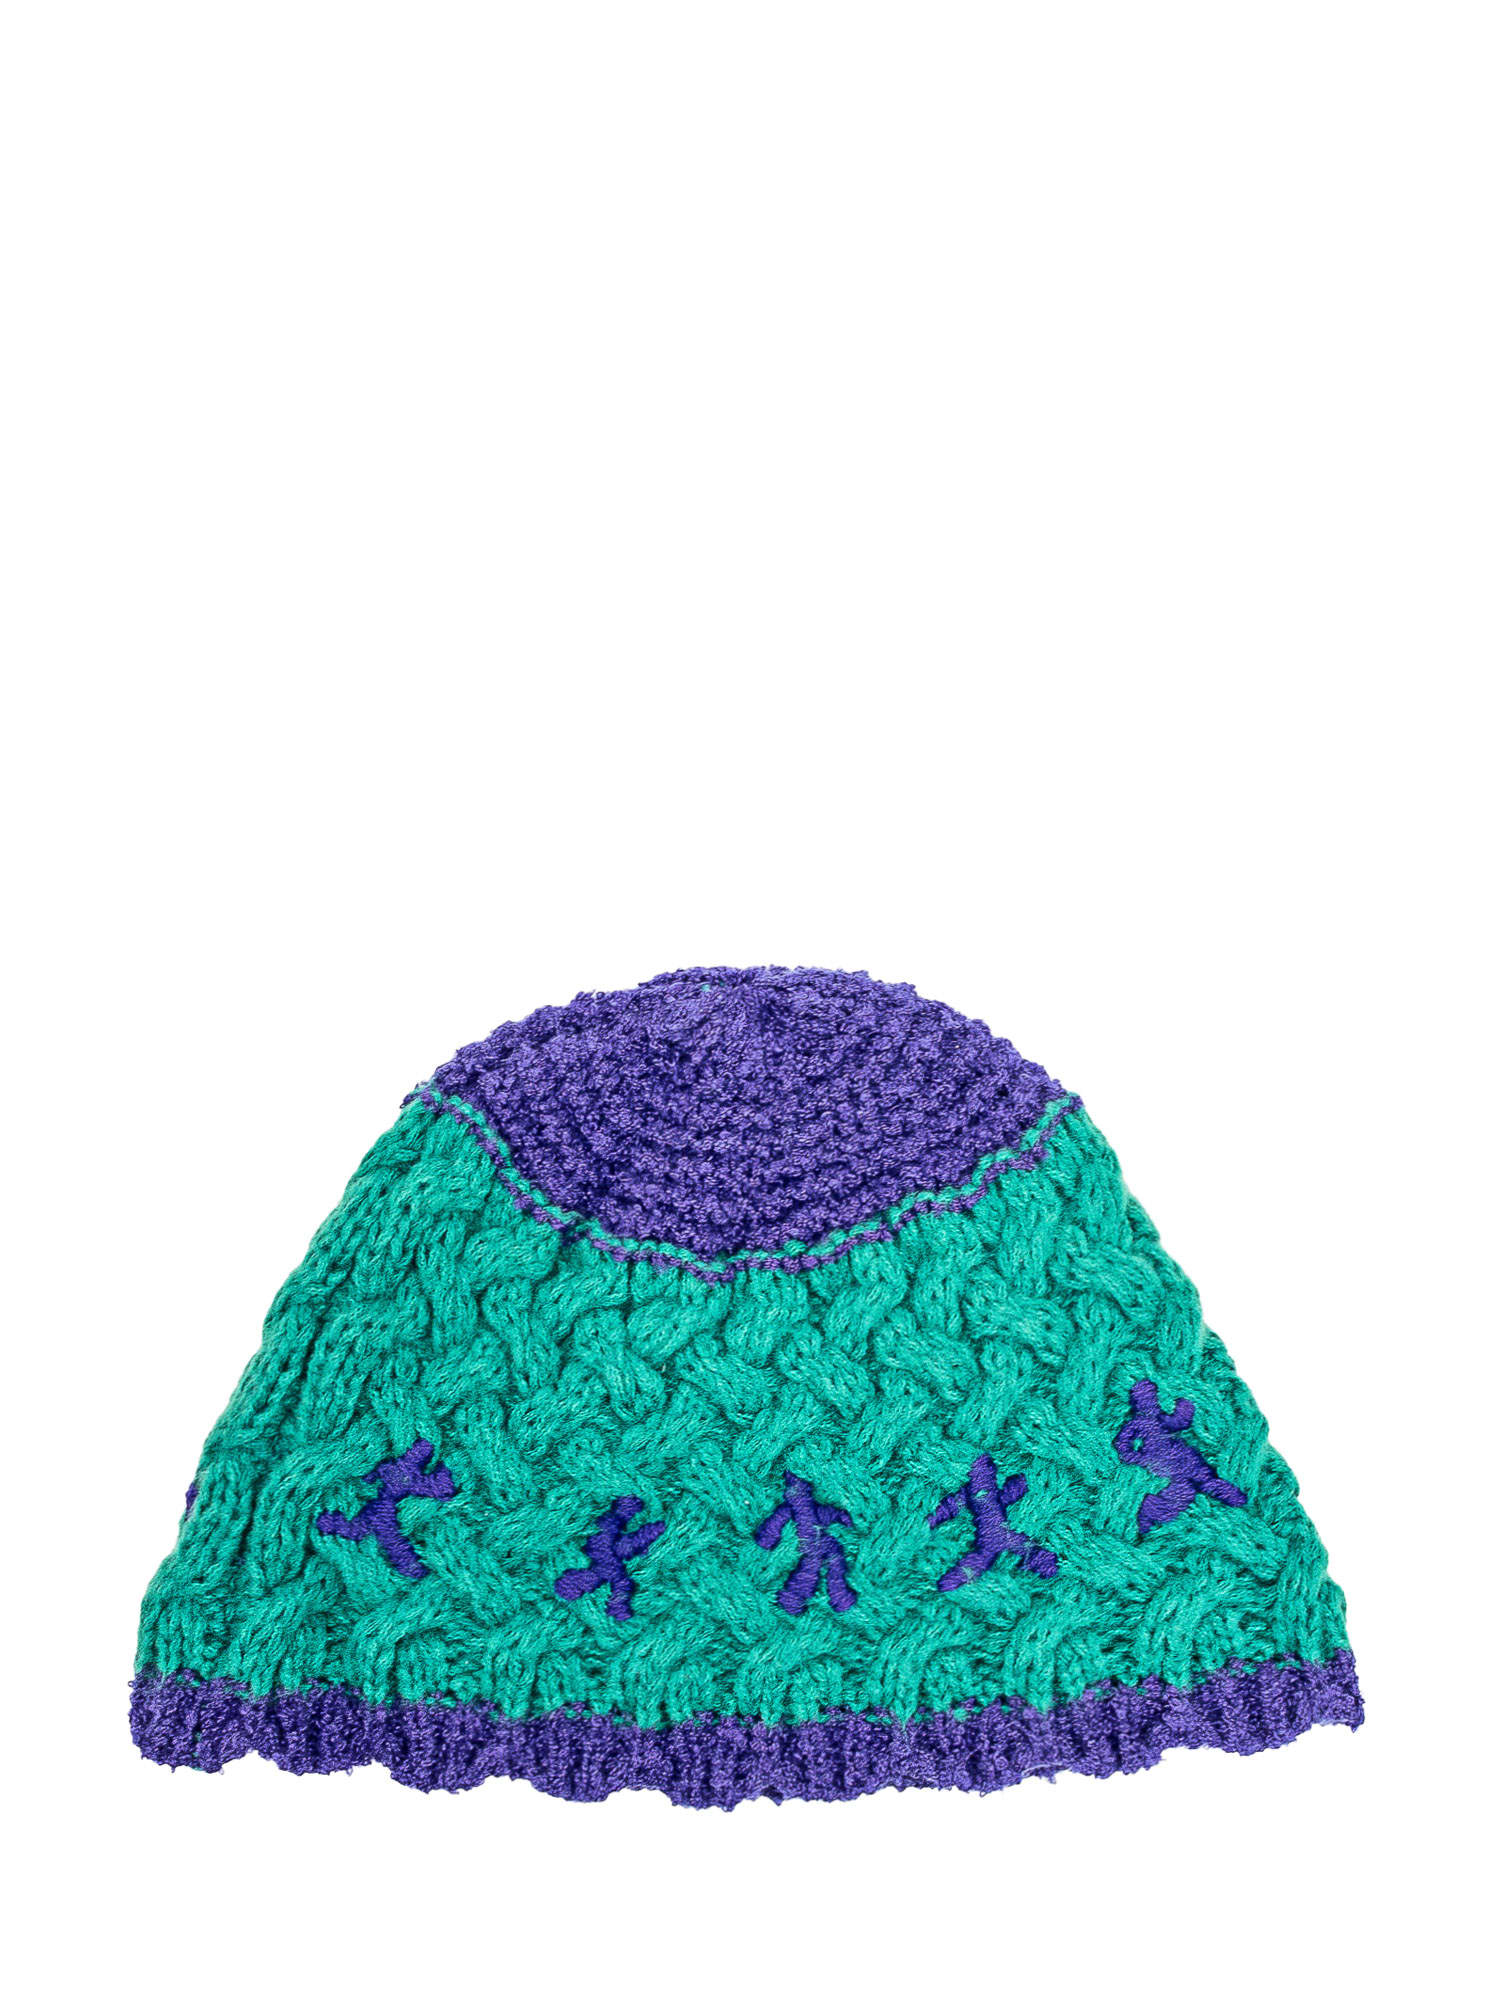 Shop Kidsuper Crocheted Hat In Green/blue